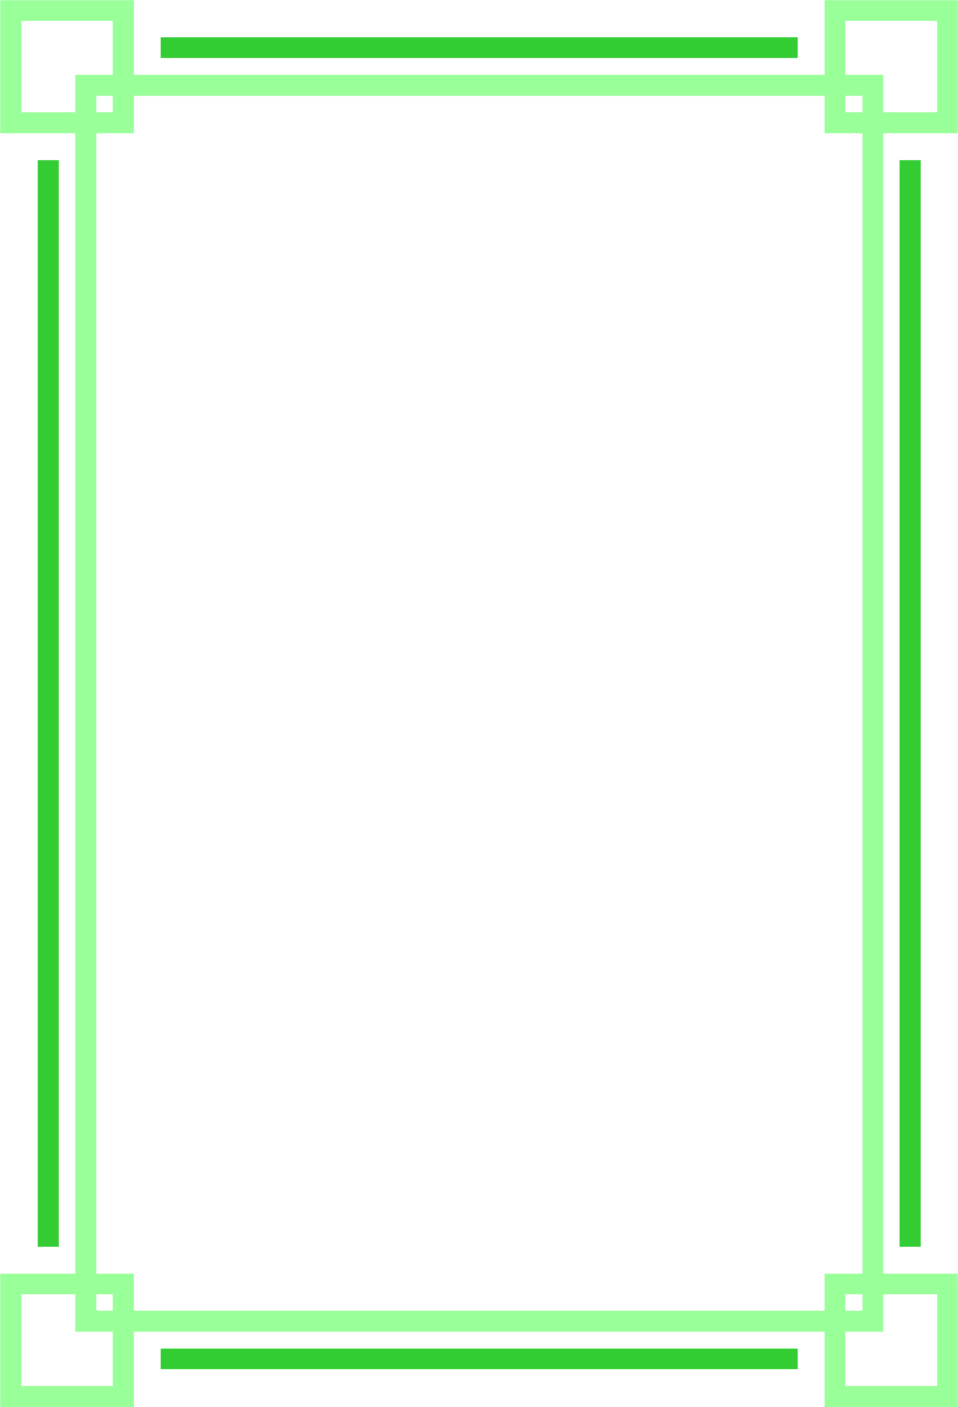 Border Green   Free Stock Photo   Illustration Of A Blank Green Frame